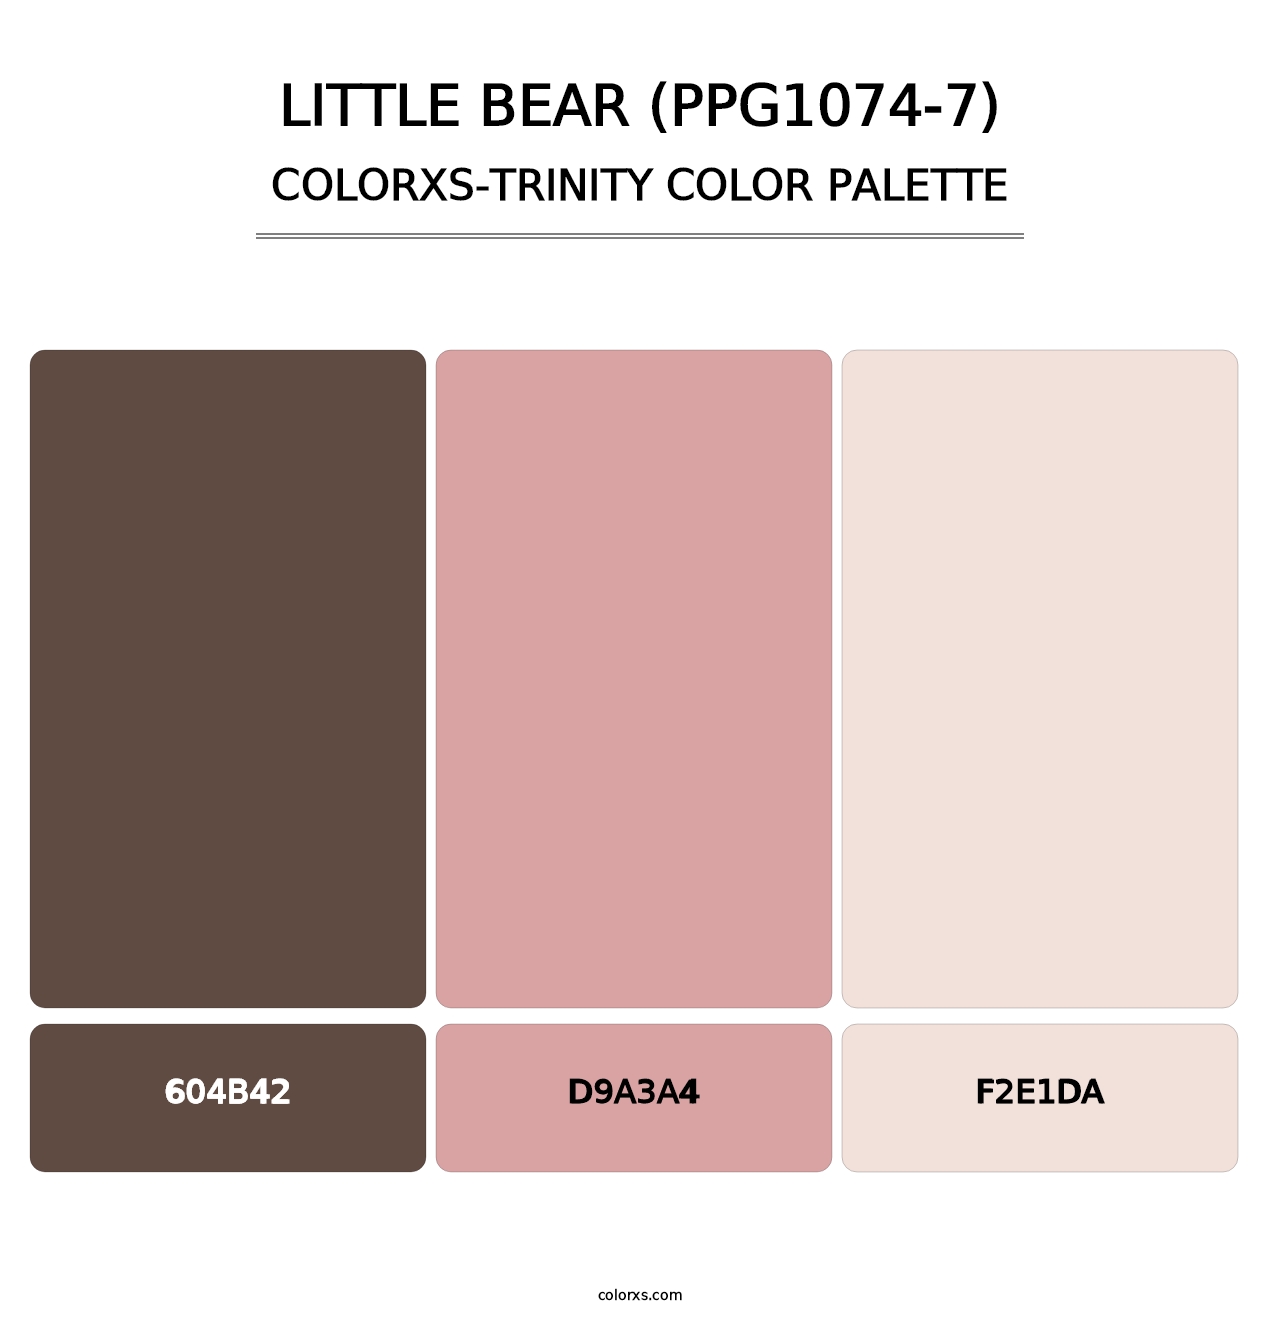 Little Bear (PPG1074-7) - Colorxs Trinity Palette